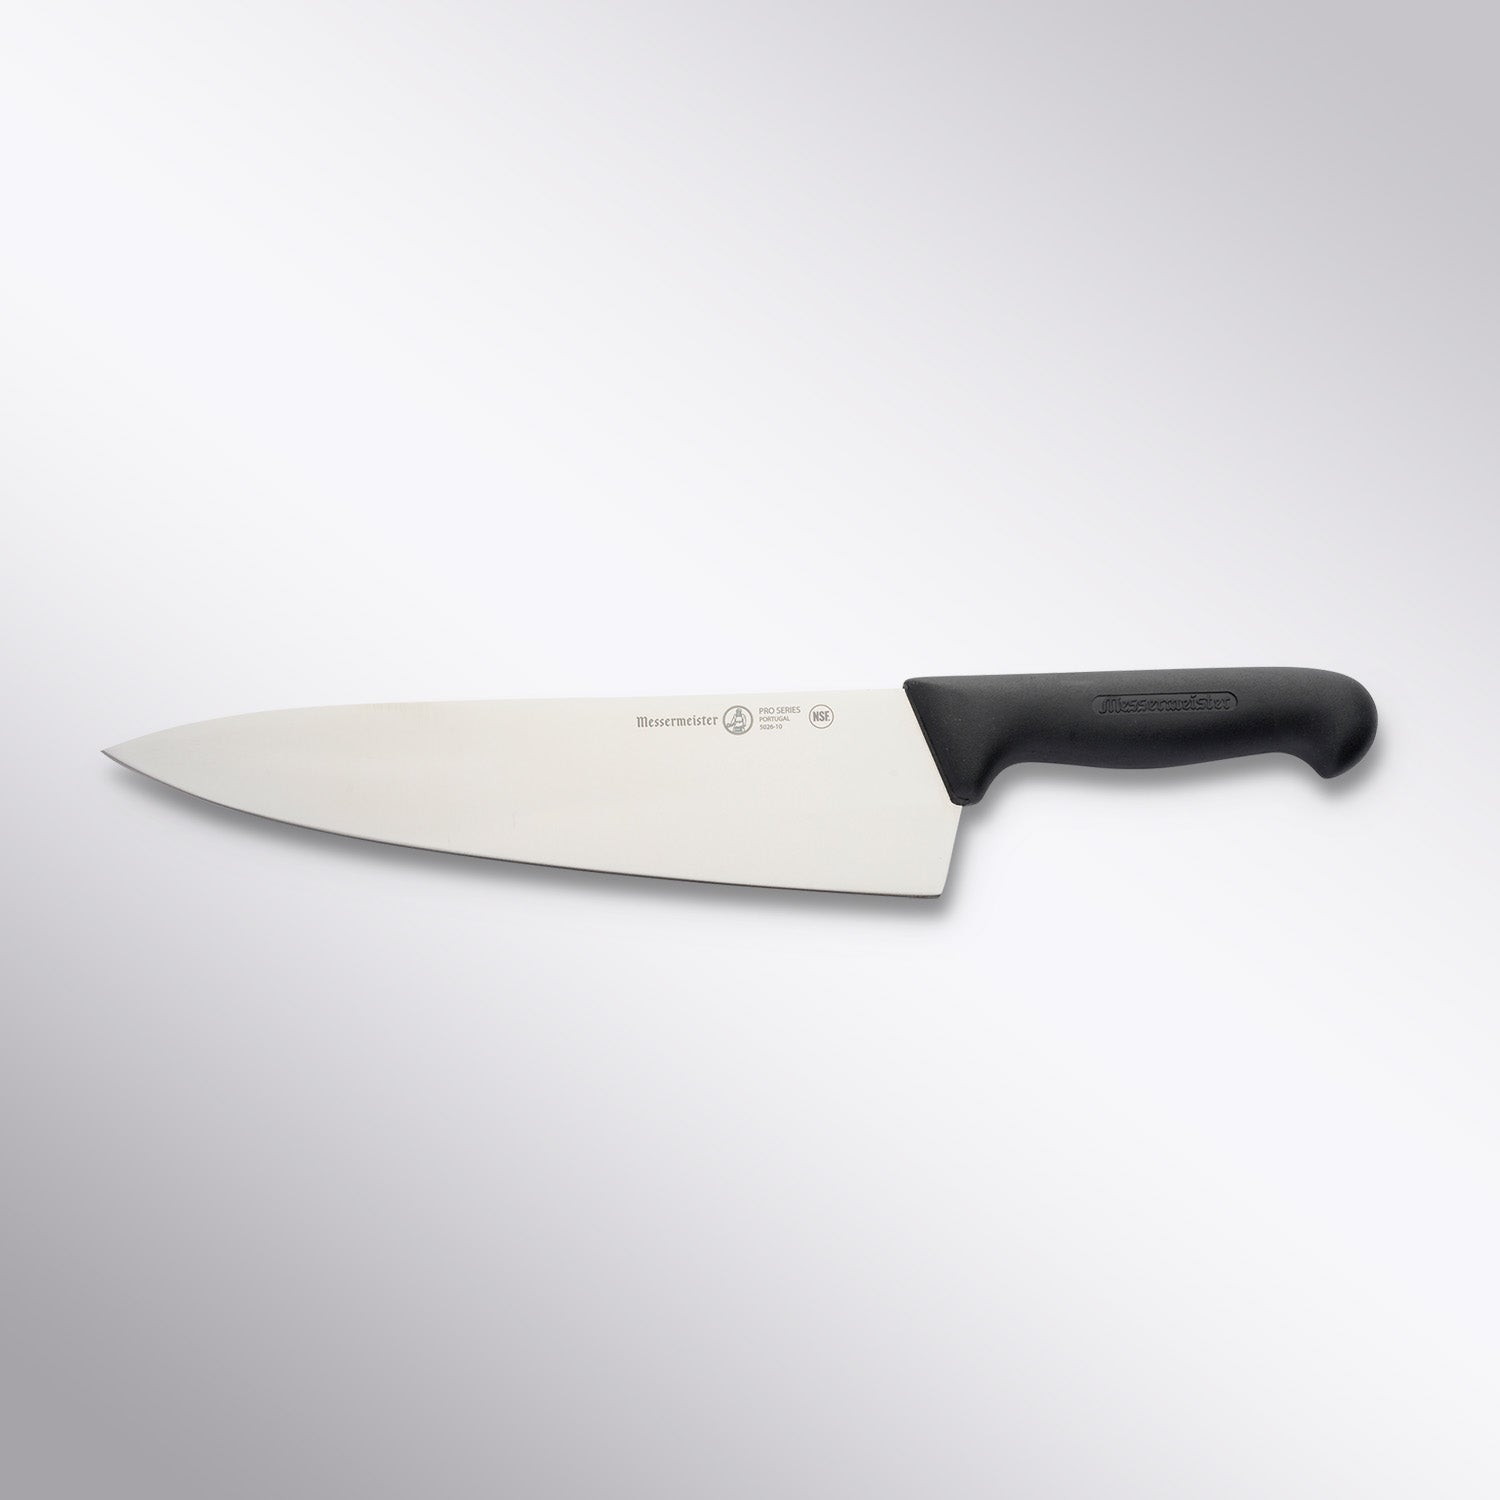 Messermeister Pro series Wide Blade Chefs Knife